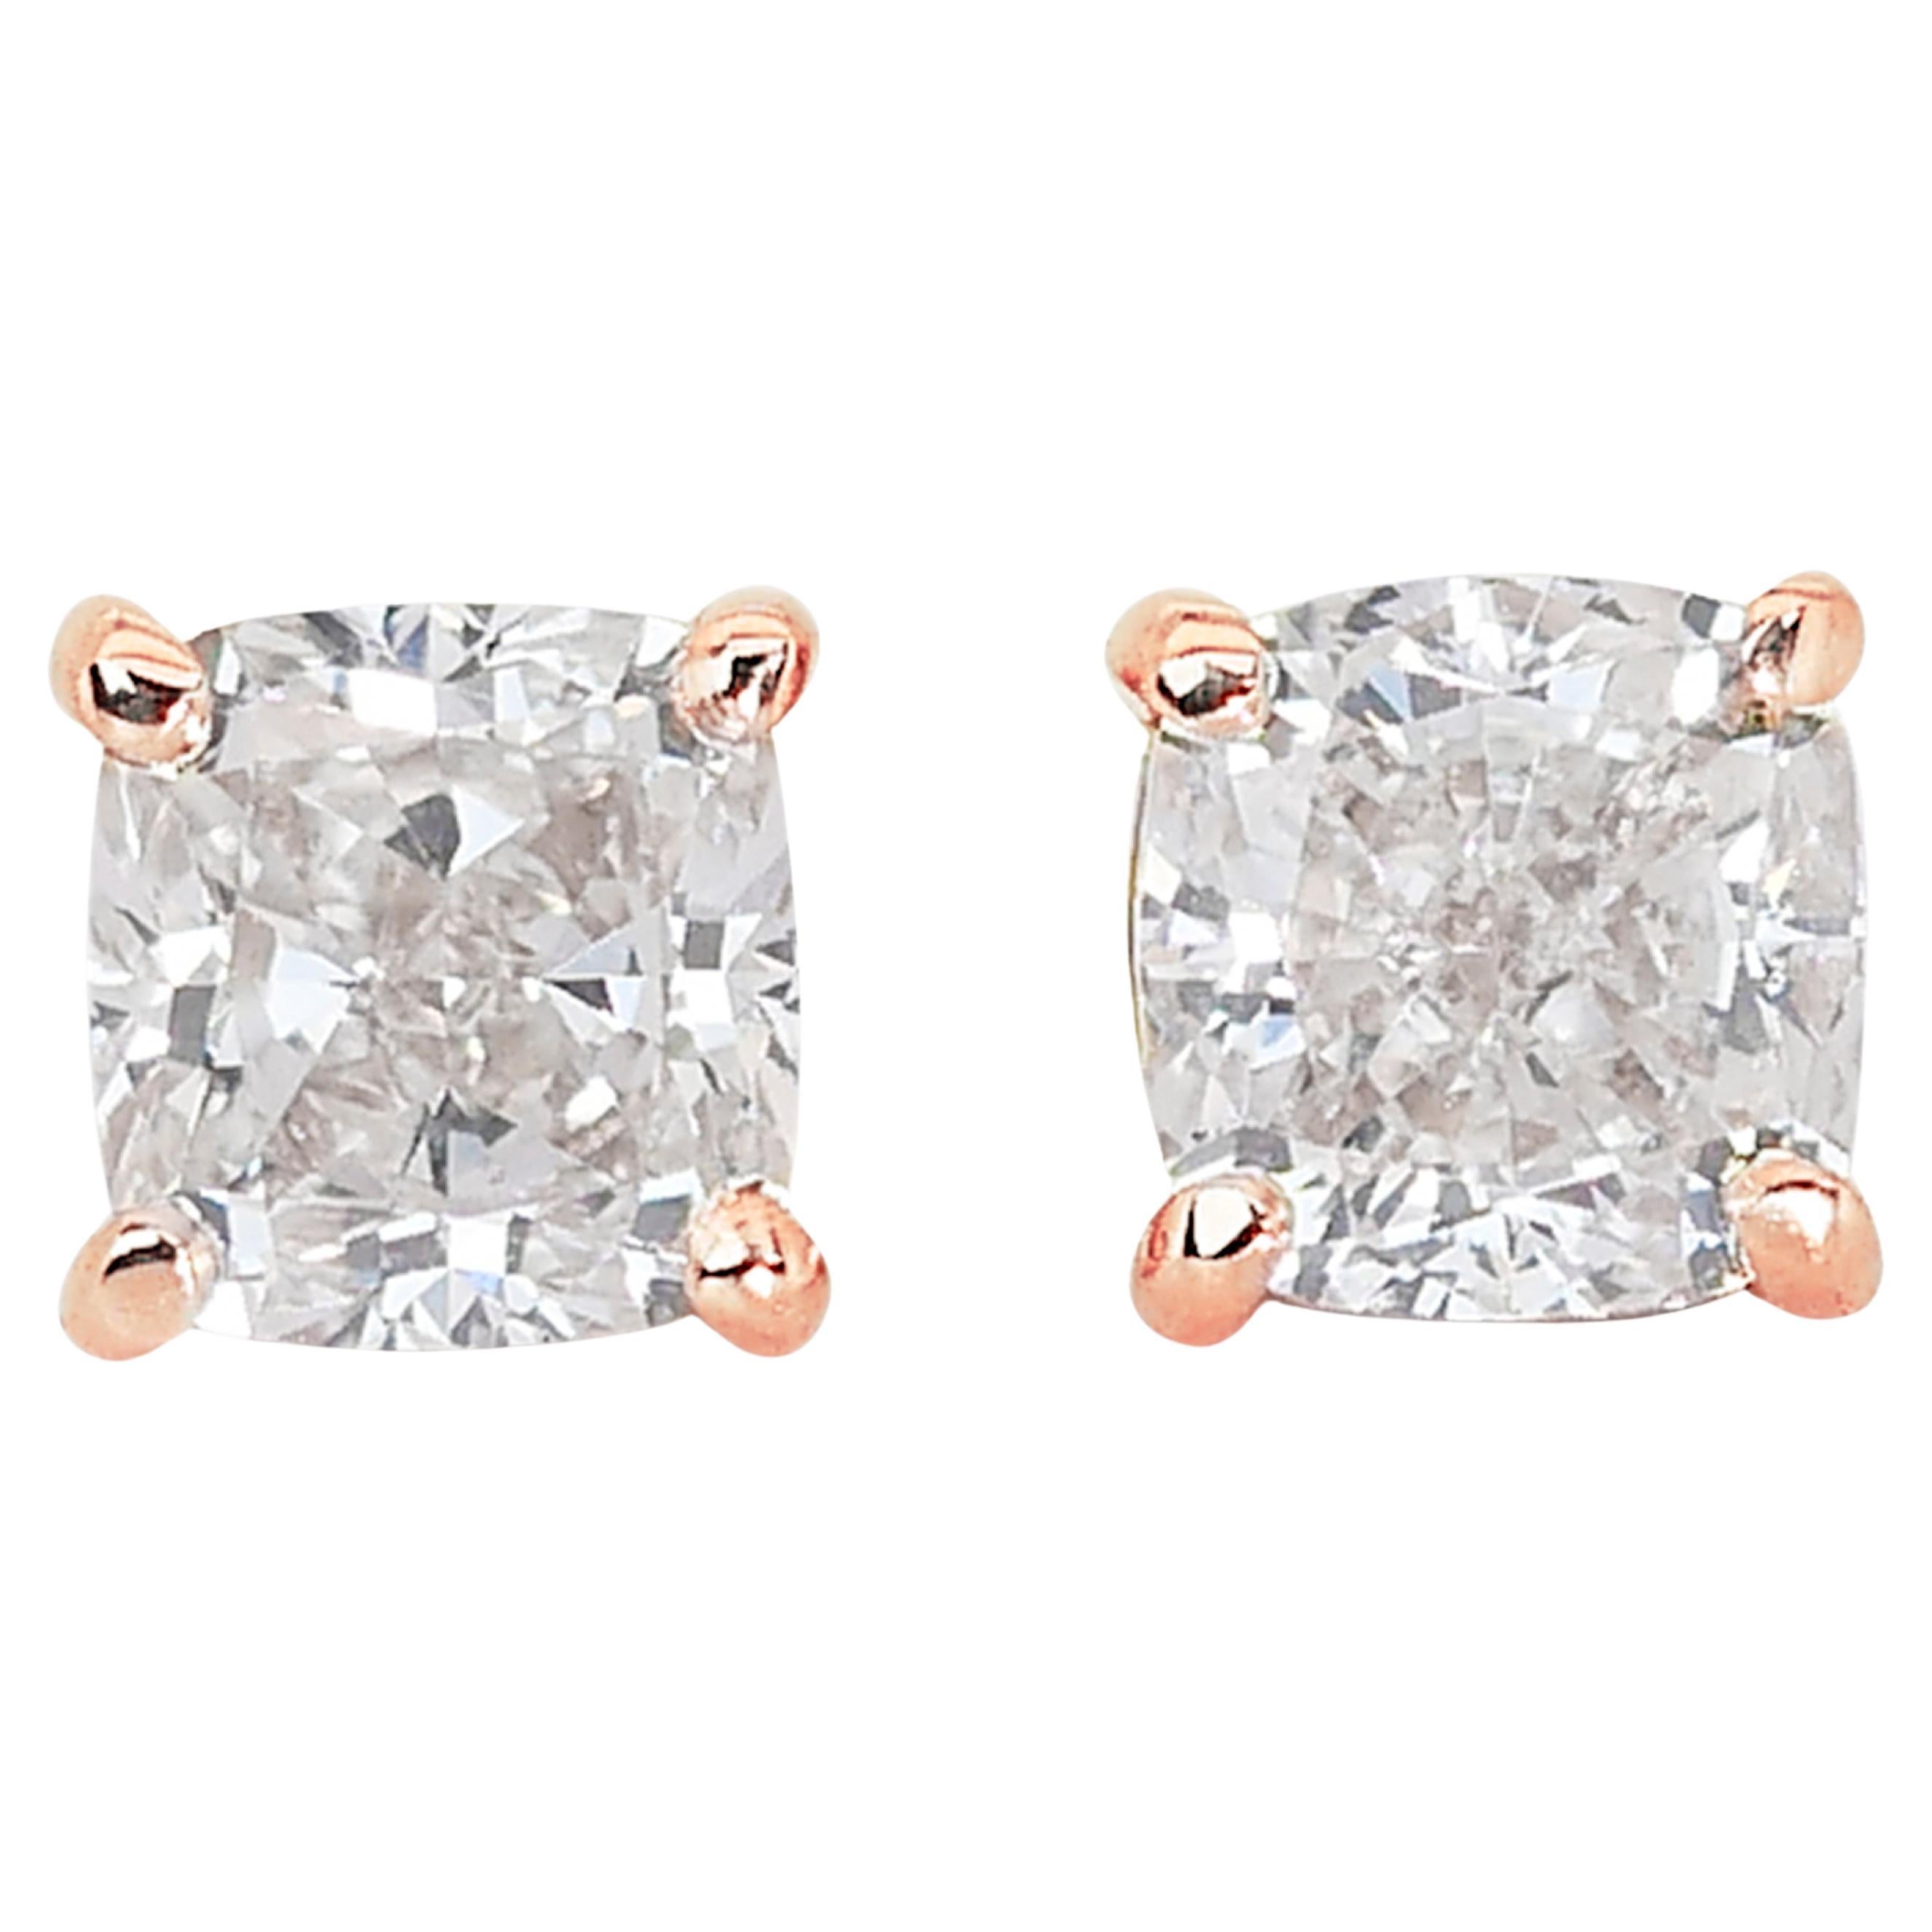 Luxurious 1.68ct Diamond Stud Earrings in 14k Rose Gold - IGI Certified For Sale